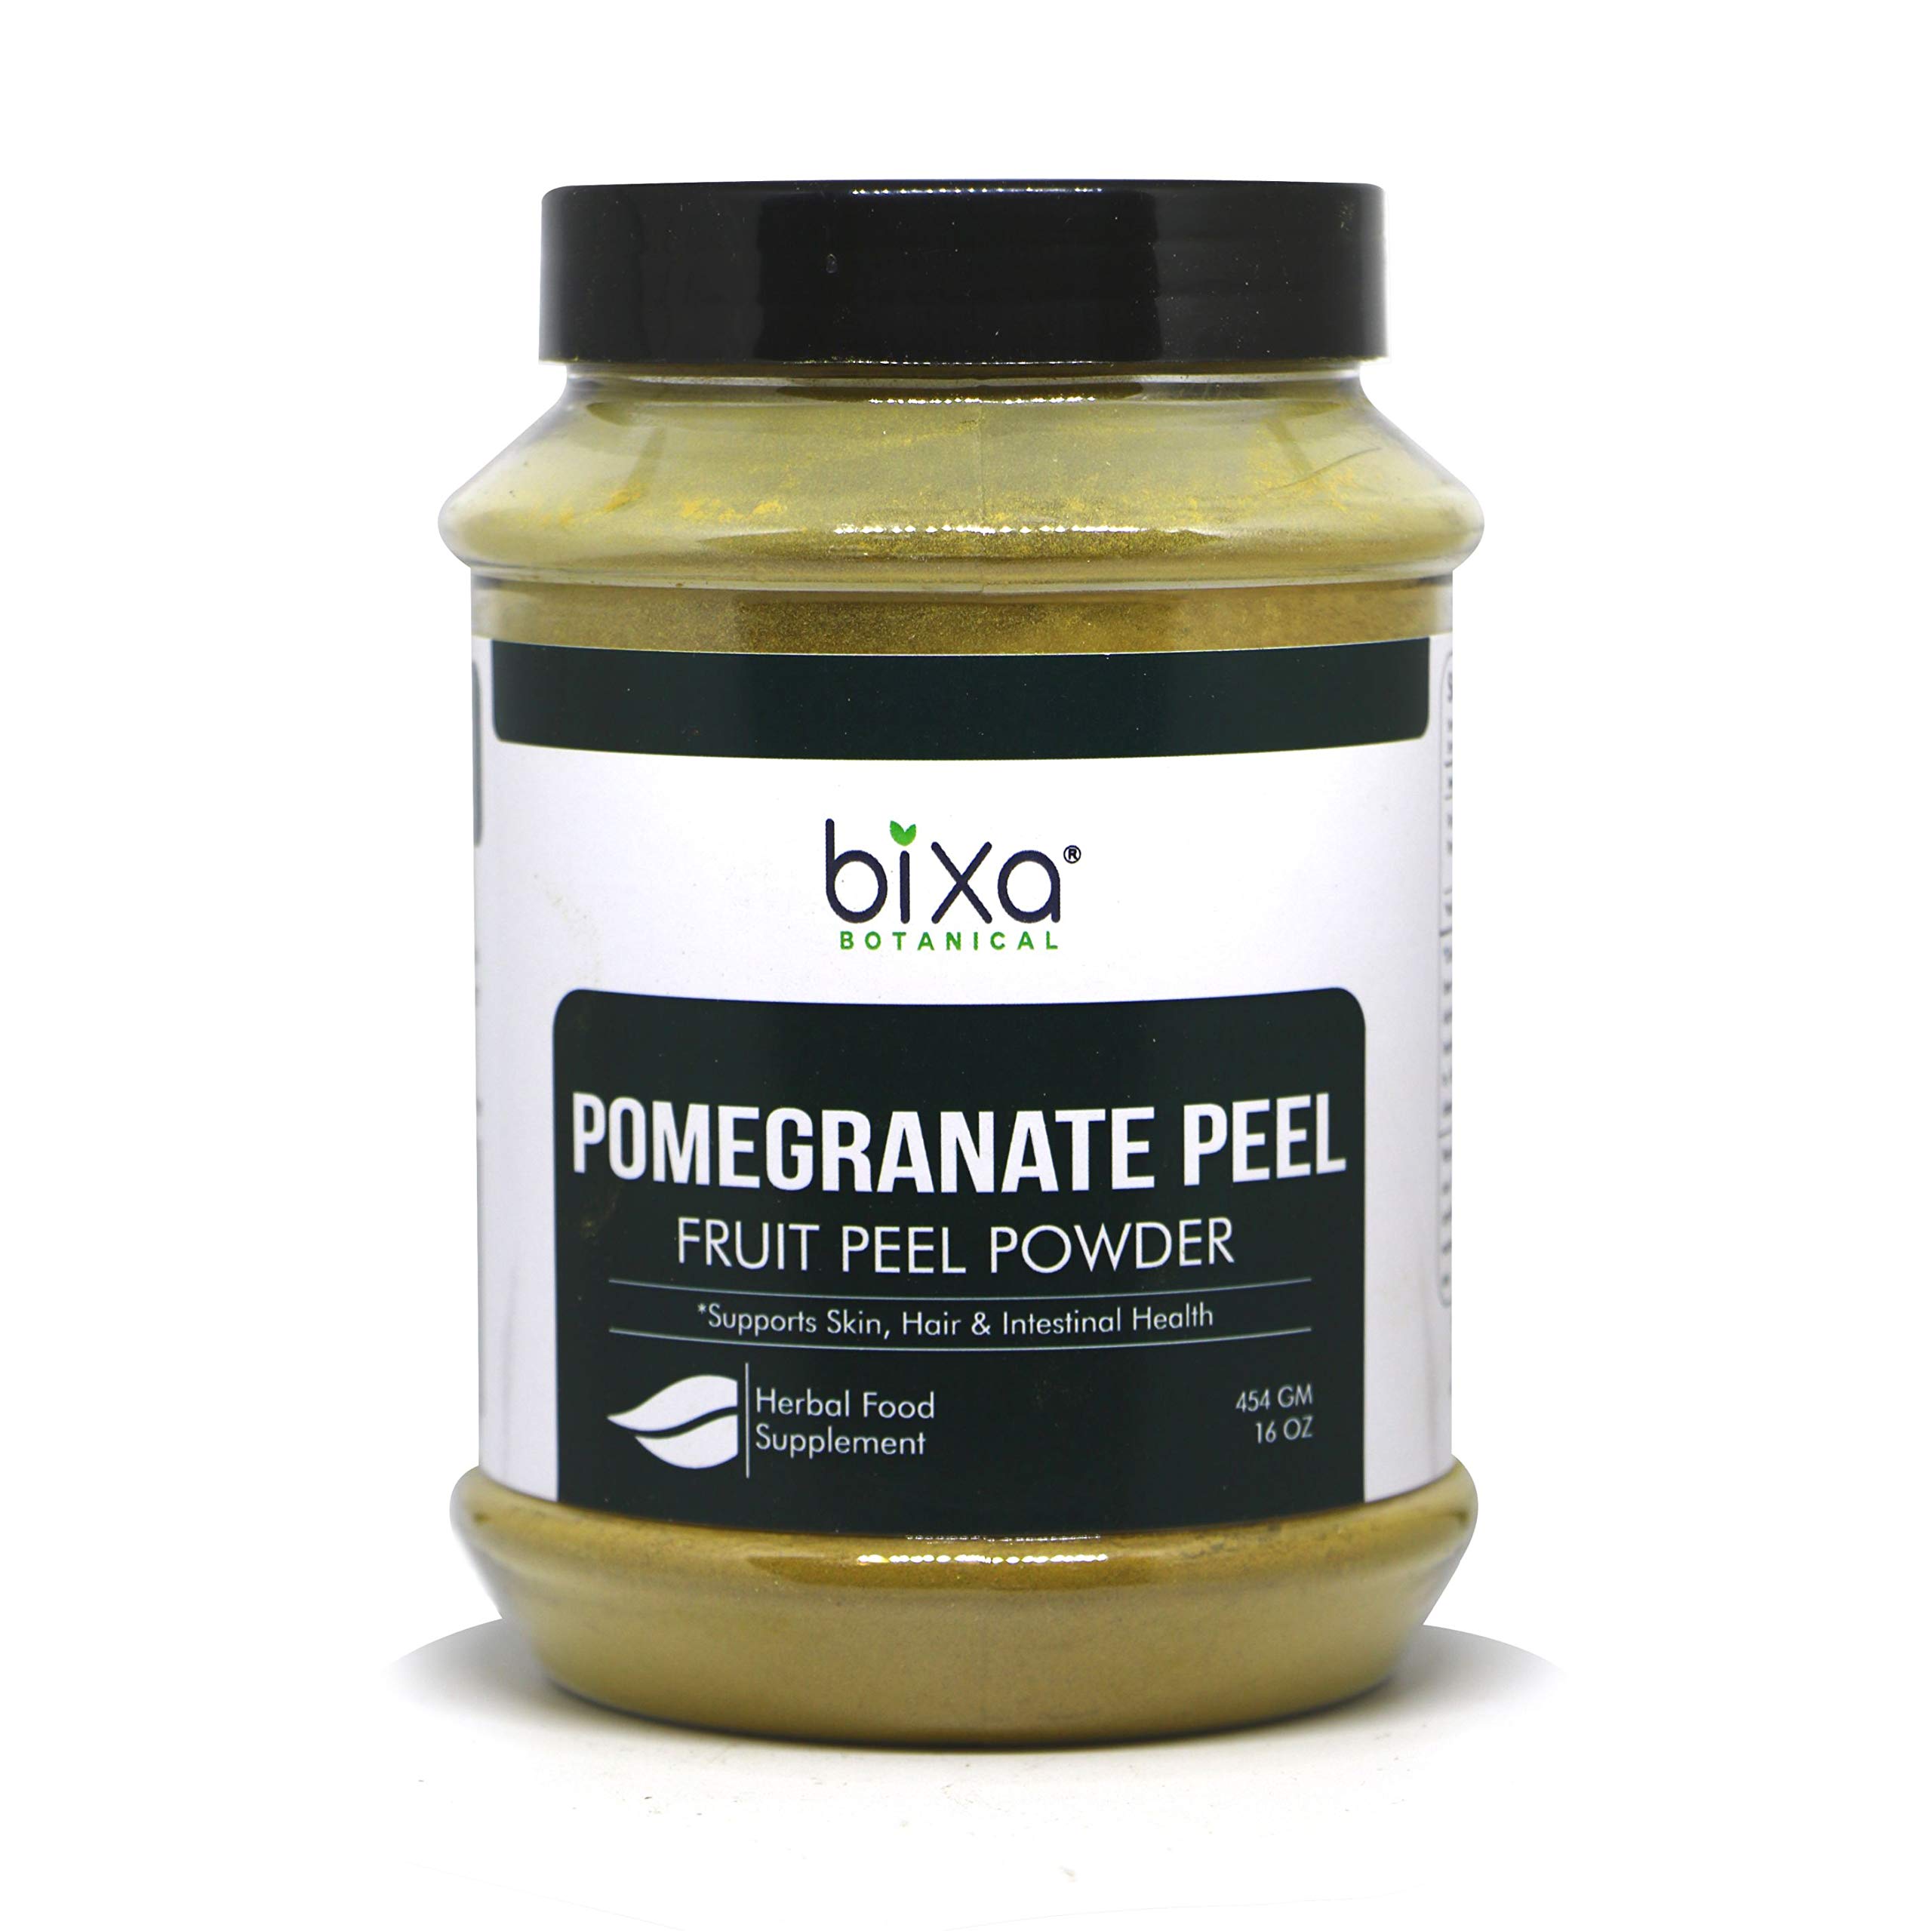 bixa BOTANICAL Pomegranate Peel Powder (Punica granatum) - 1 Pound (16 Oz) 454 GRMS | Ayurvedic Herbal Supplement Helps to Improves Digestion